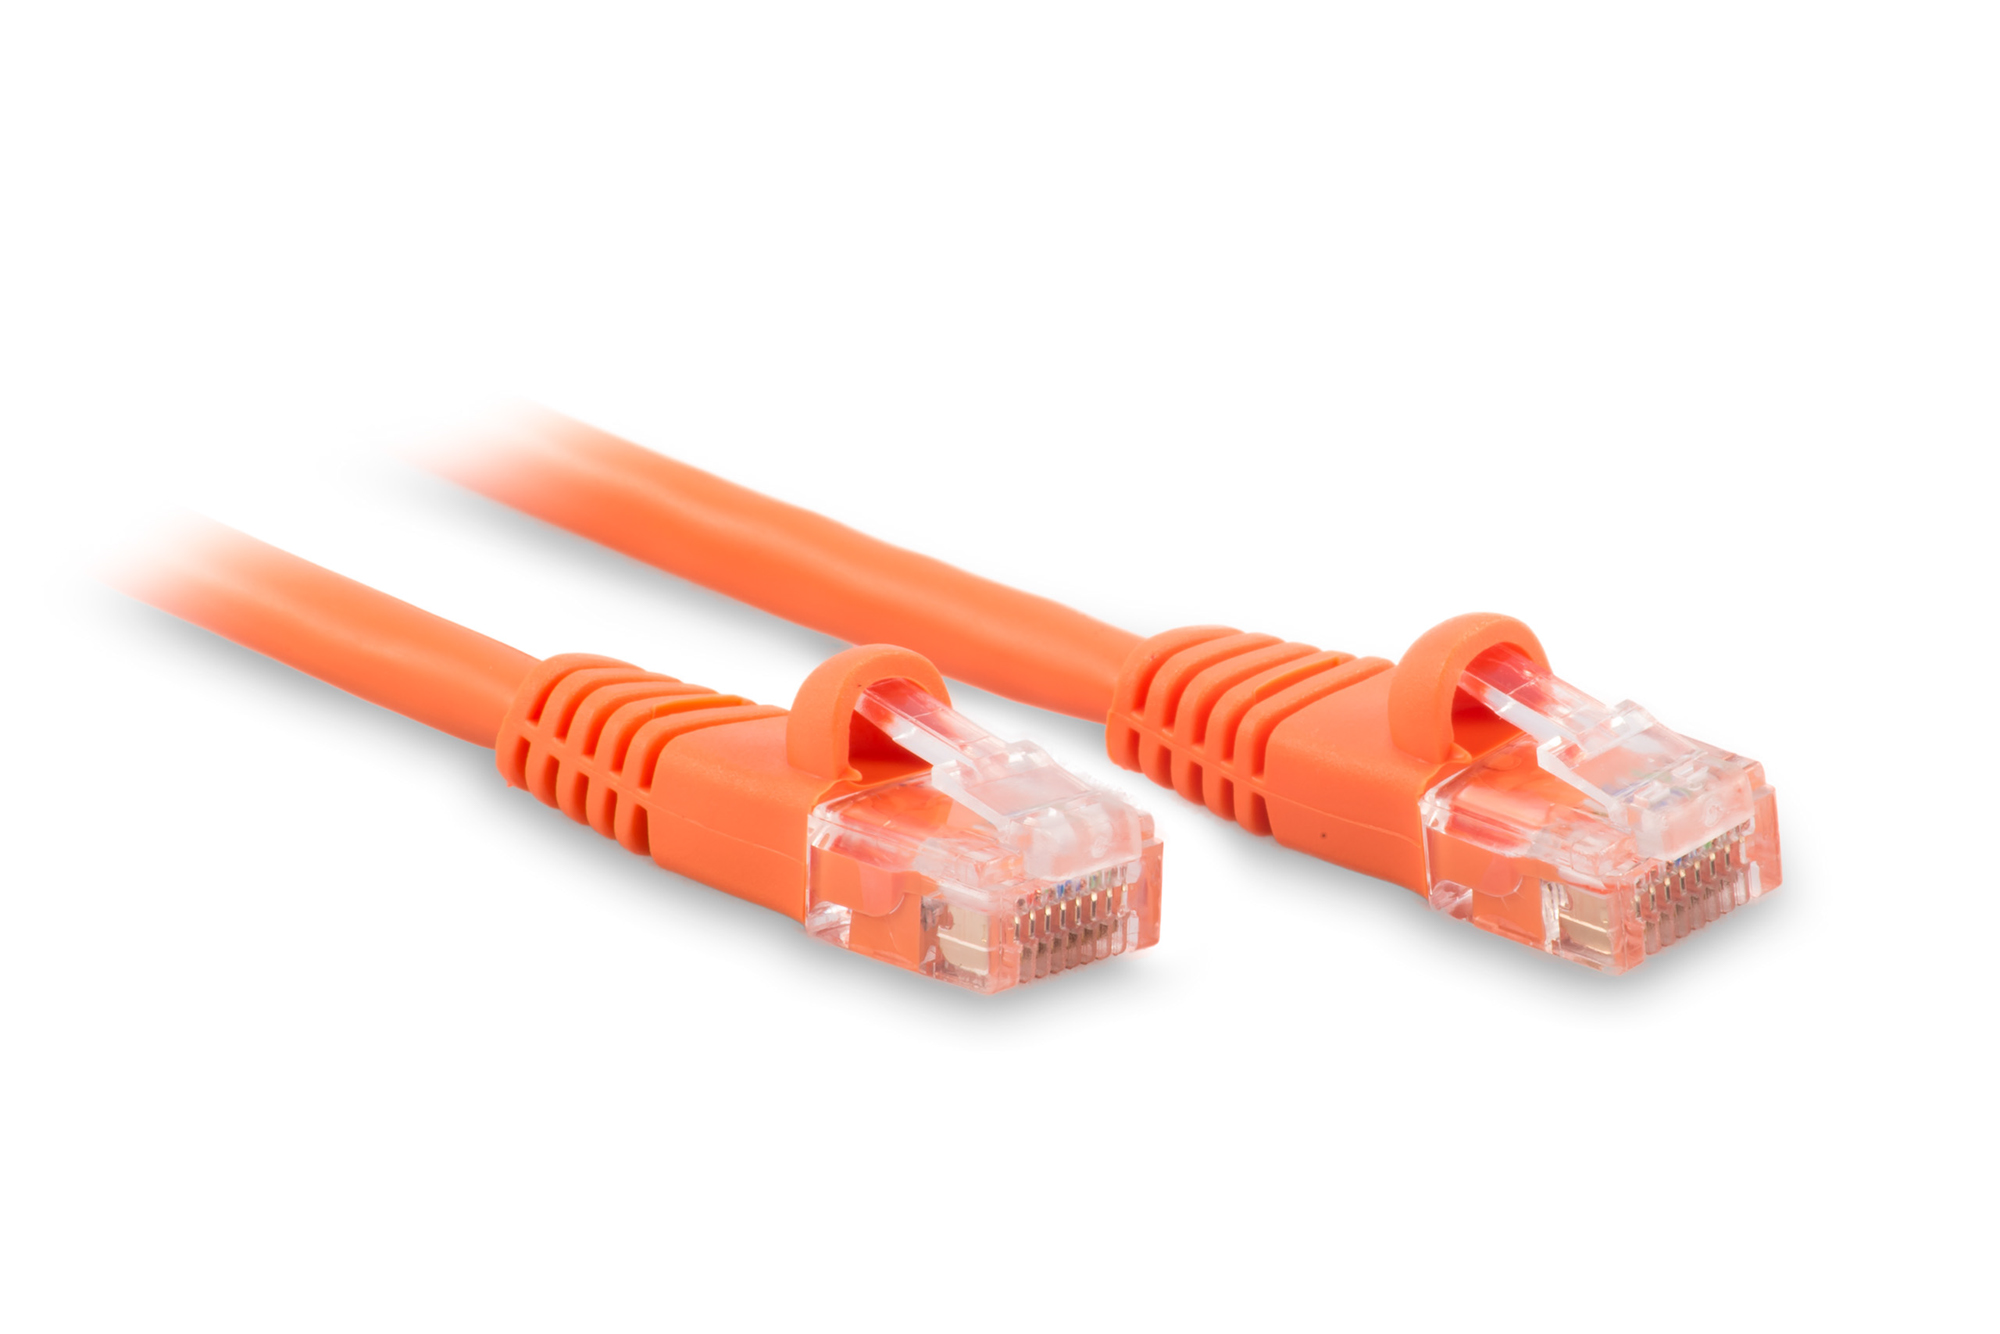 50ft Cat6 Ethernet Patch Cable - Orange Color - Snagless Boot, Stranded, RJ45, 550Mhz, 24AWG